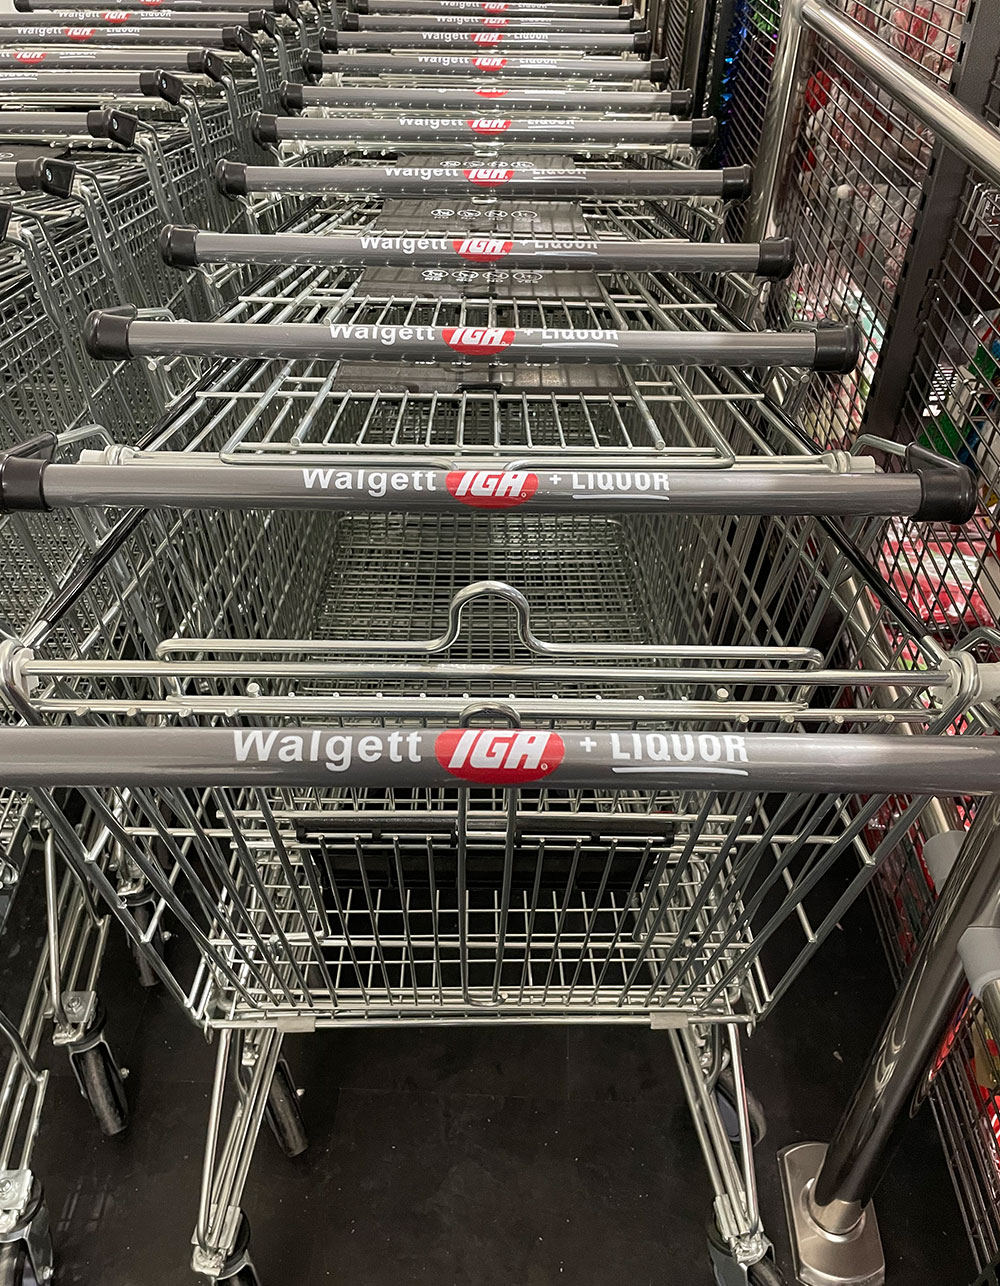 Standard Shopping Trolleys